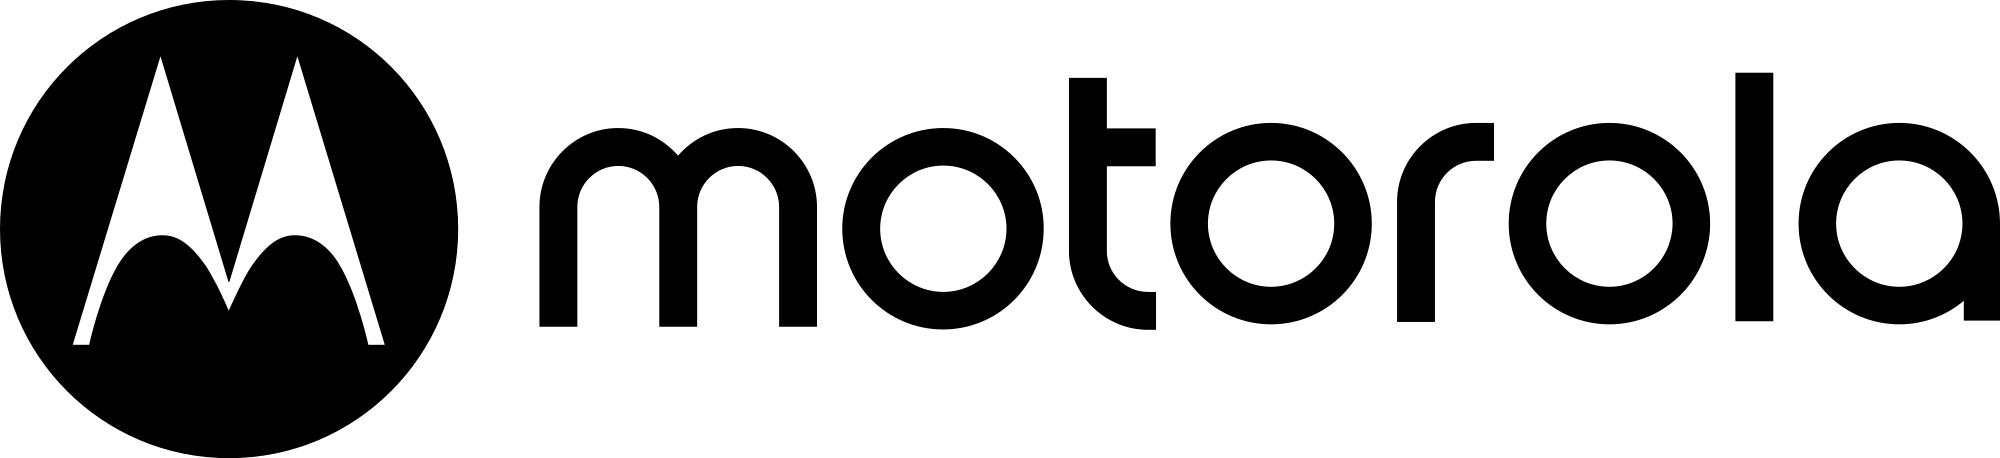 Google Motorola Logo - File:Motorola new logo.svg - Wikimedia Commons